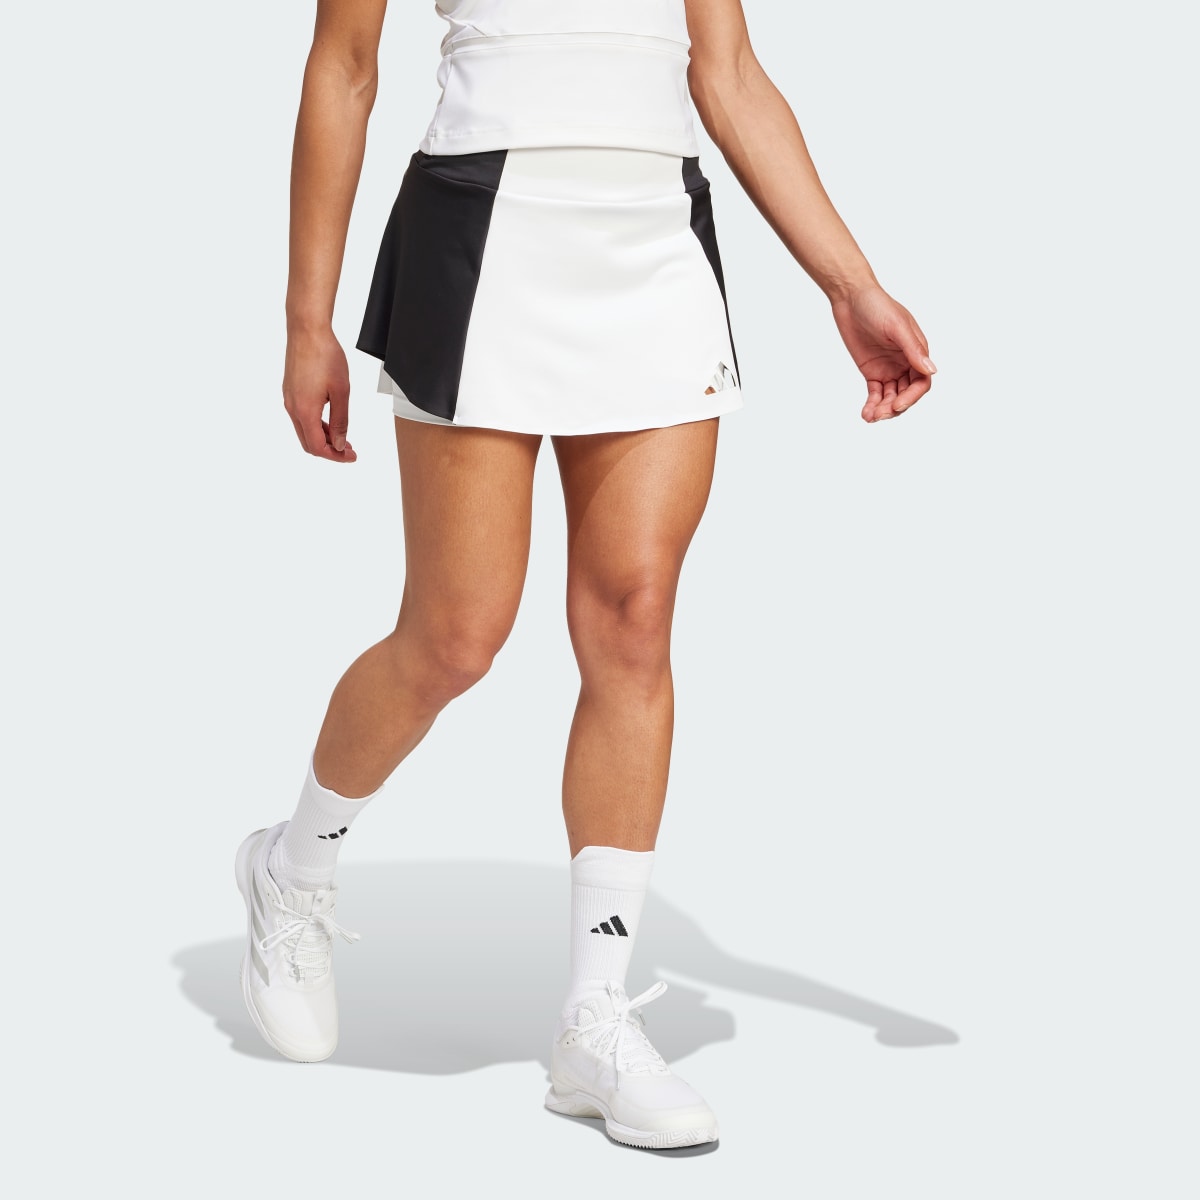 Adidas Tennis Premium Skirt. 4